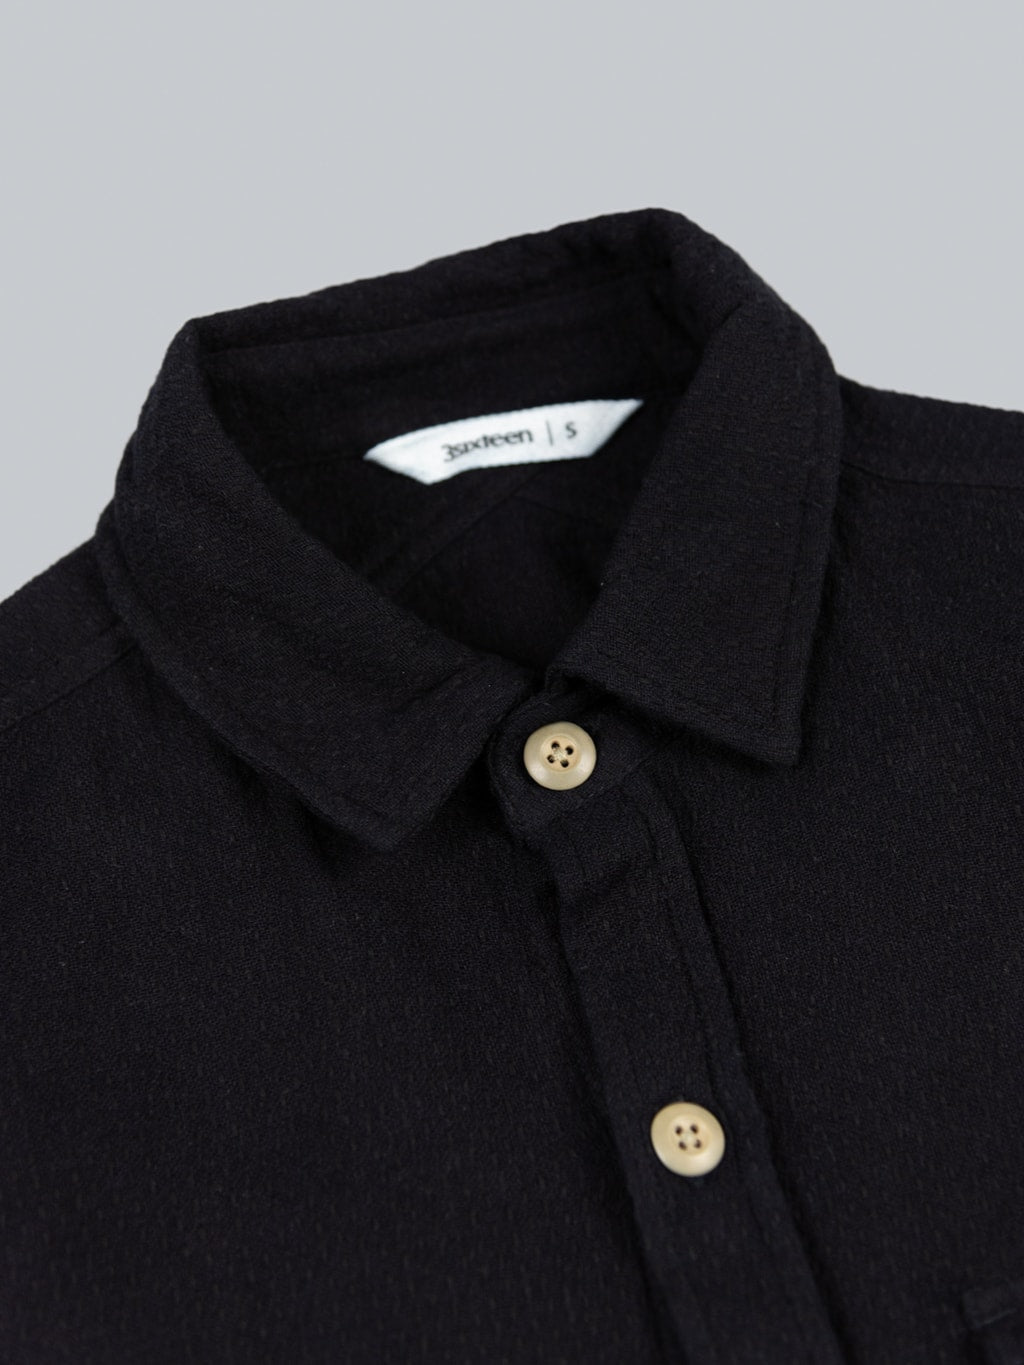 3sixteen CPO Shirt black Sashiko collar button